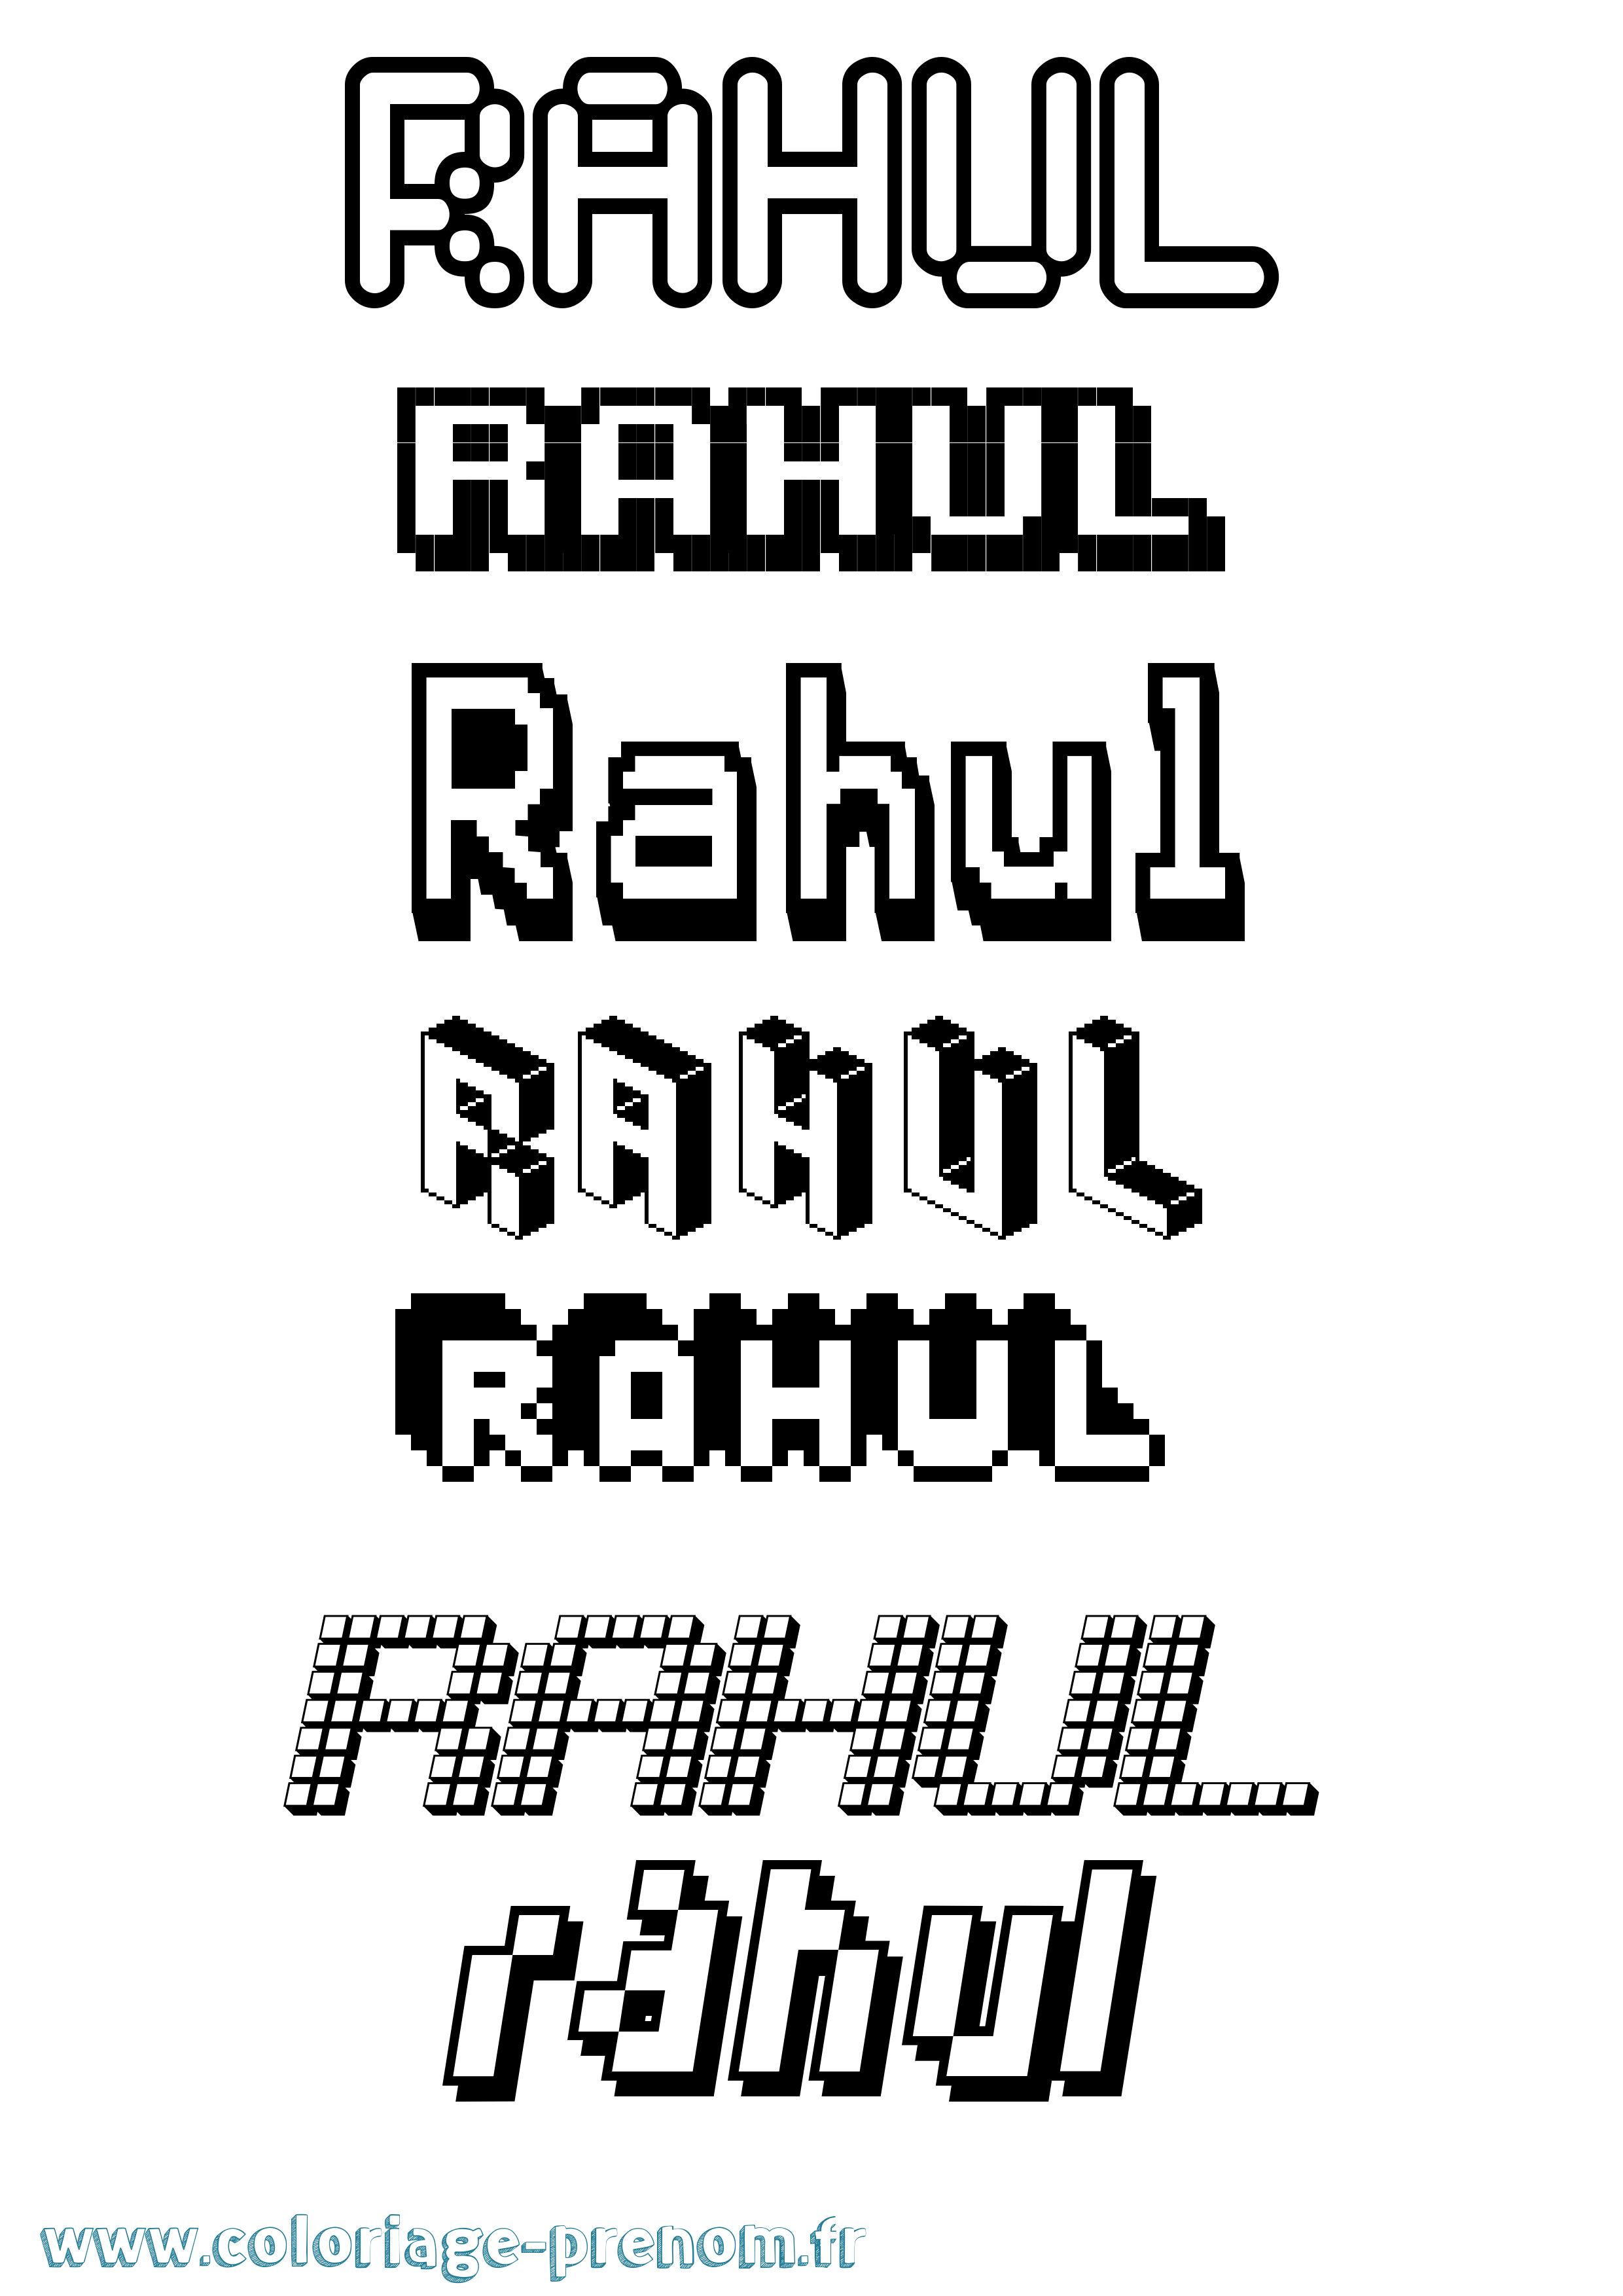 Coloriage prénom Rahul Pixel